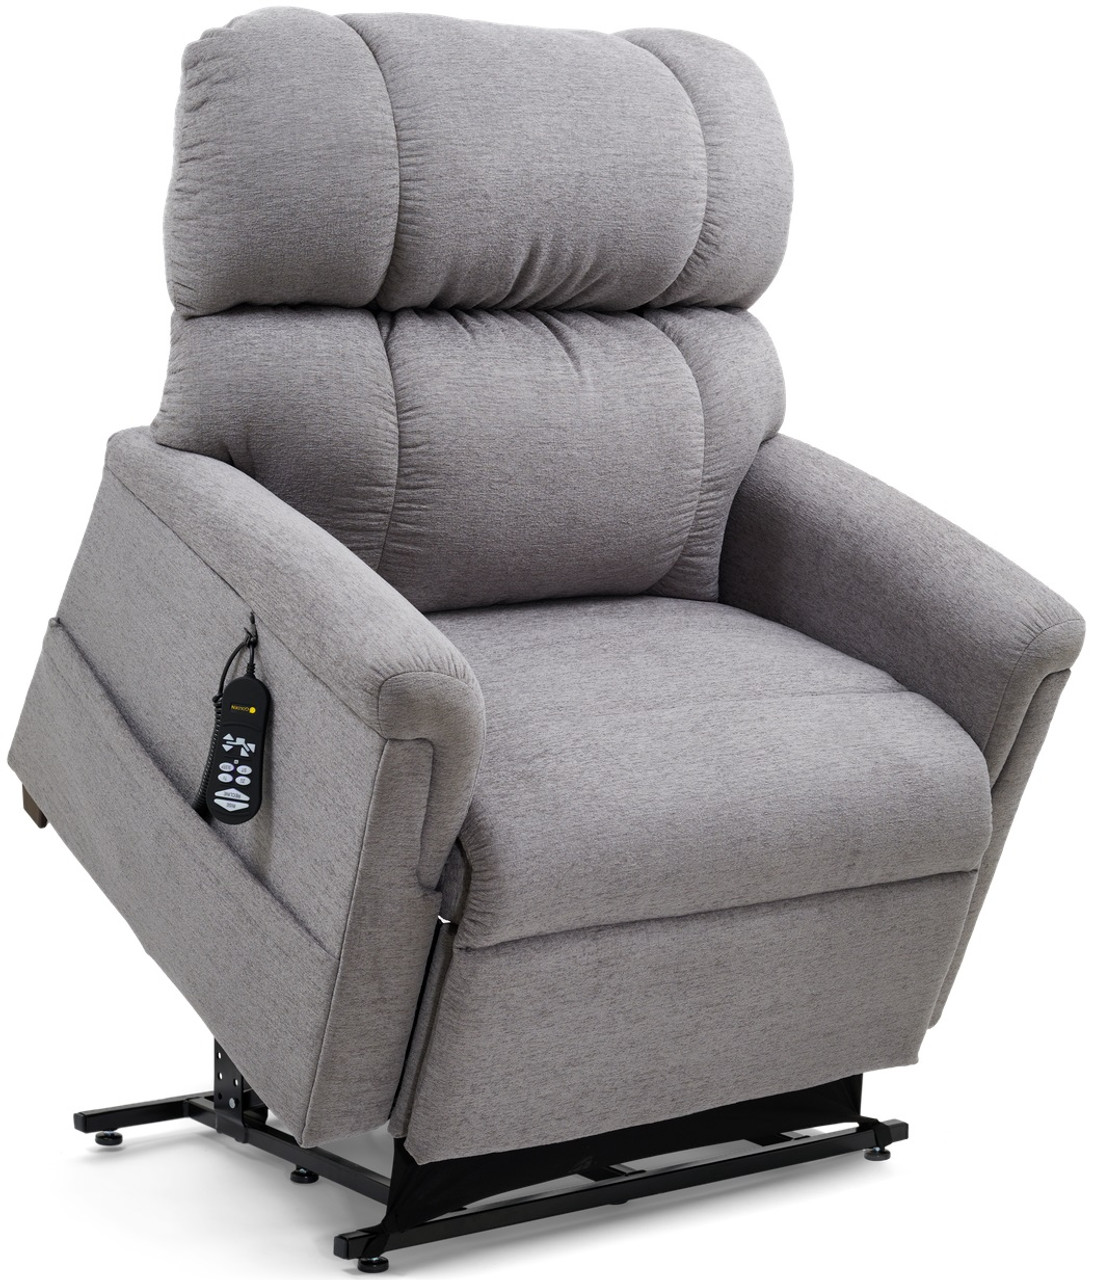 Golden Maxi Comforter Wide PR535 Lift Chair Recliner